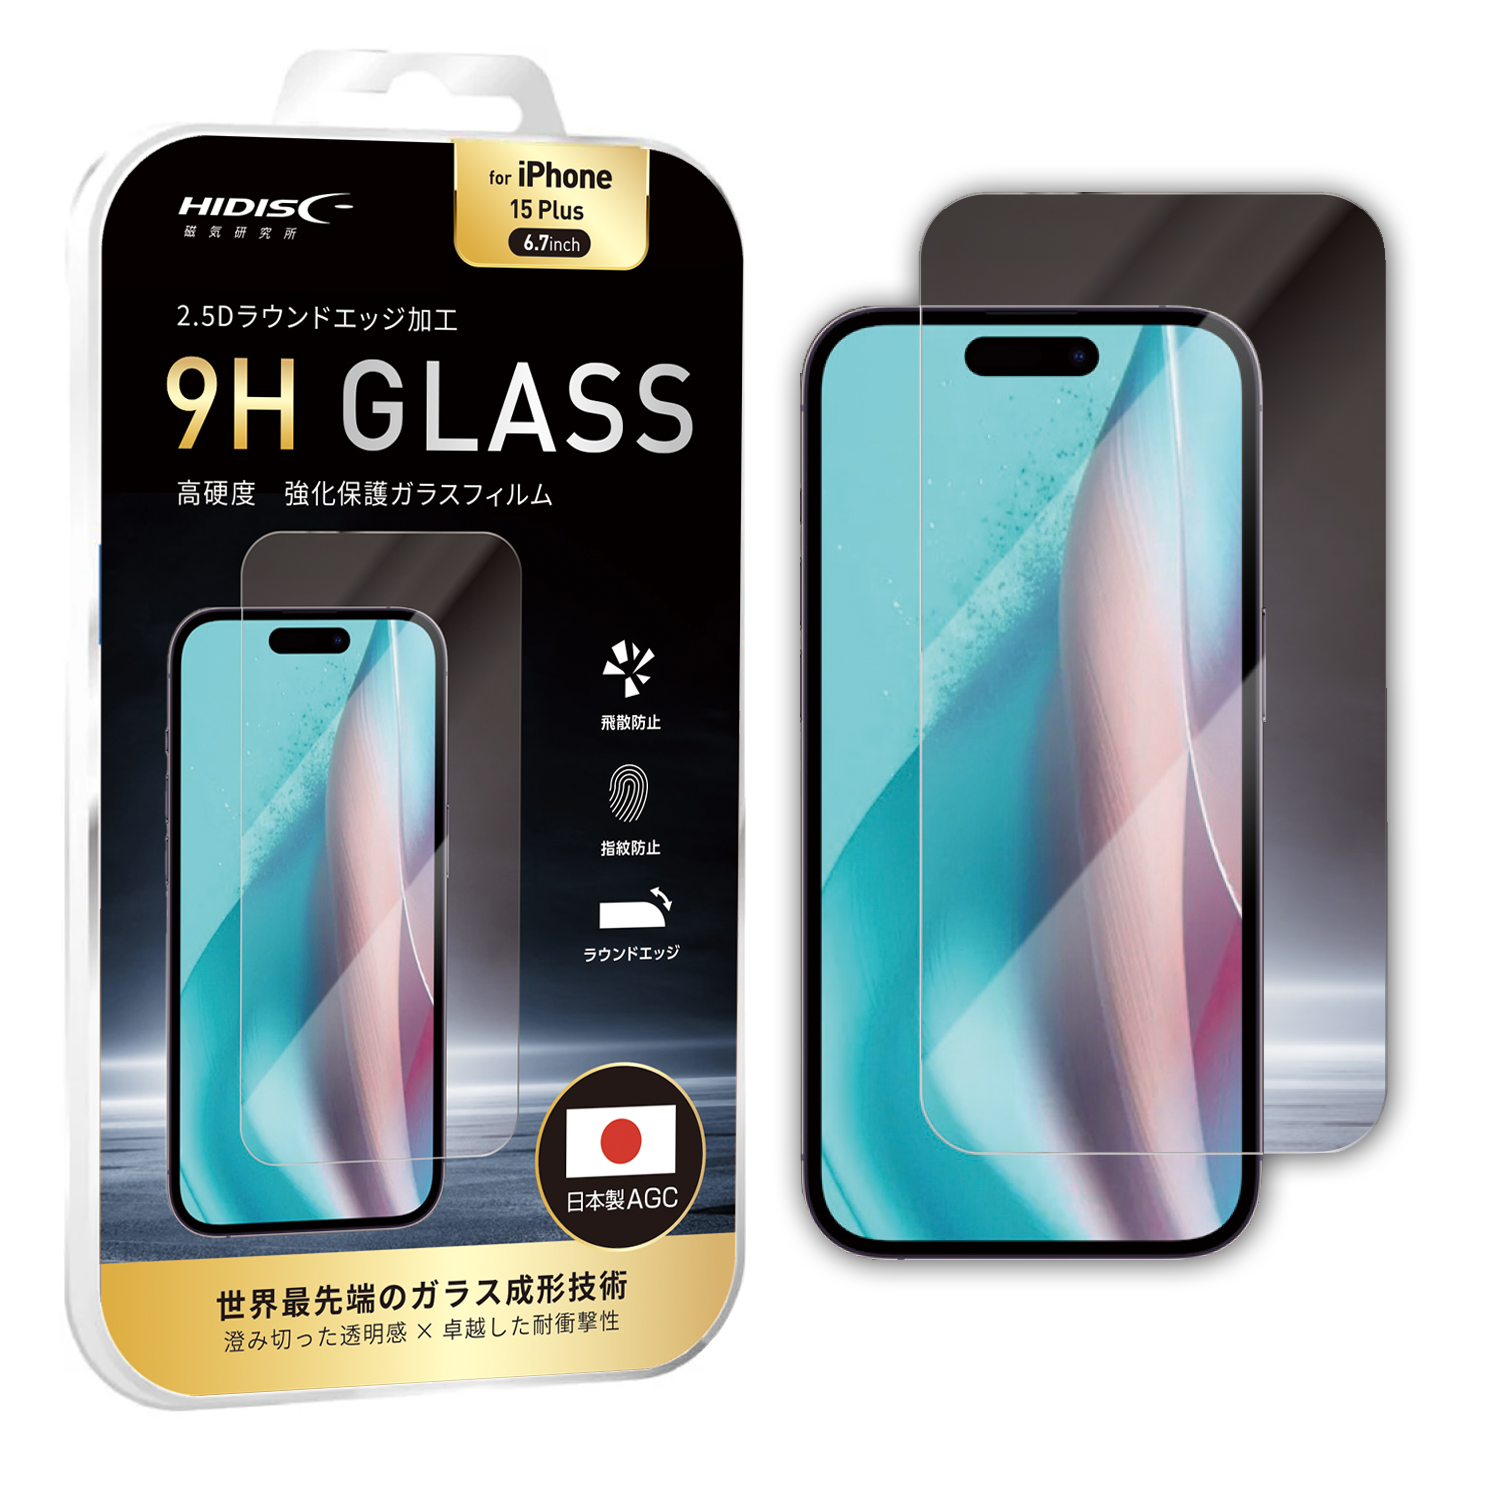 HIDISC 2.5D強化保護ガラスフィルム for iPhone15 Plus 6.7inch